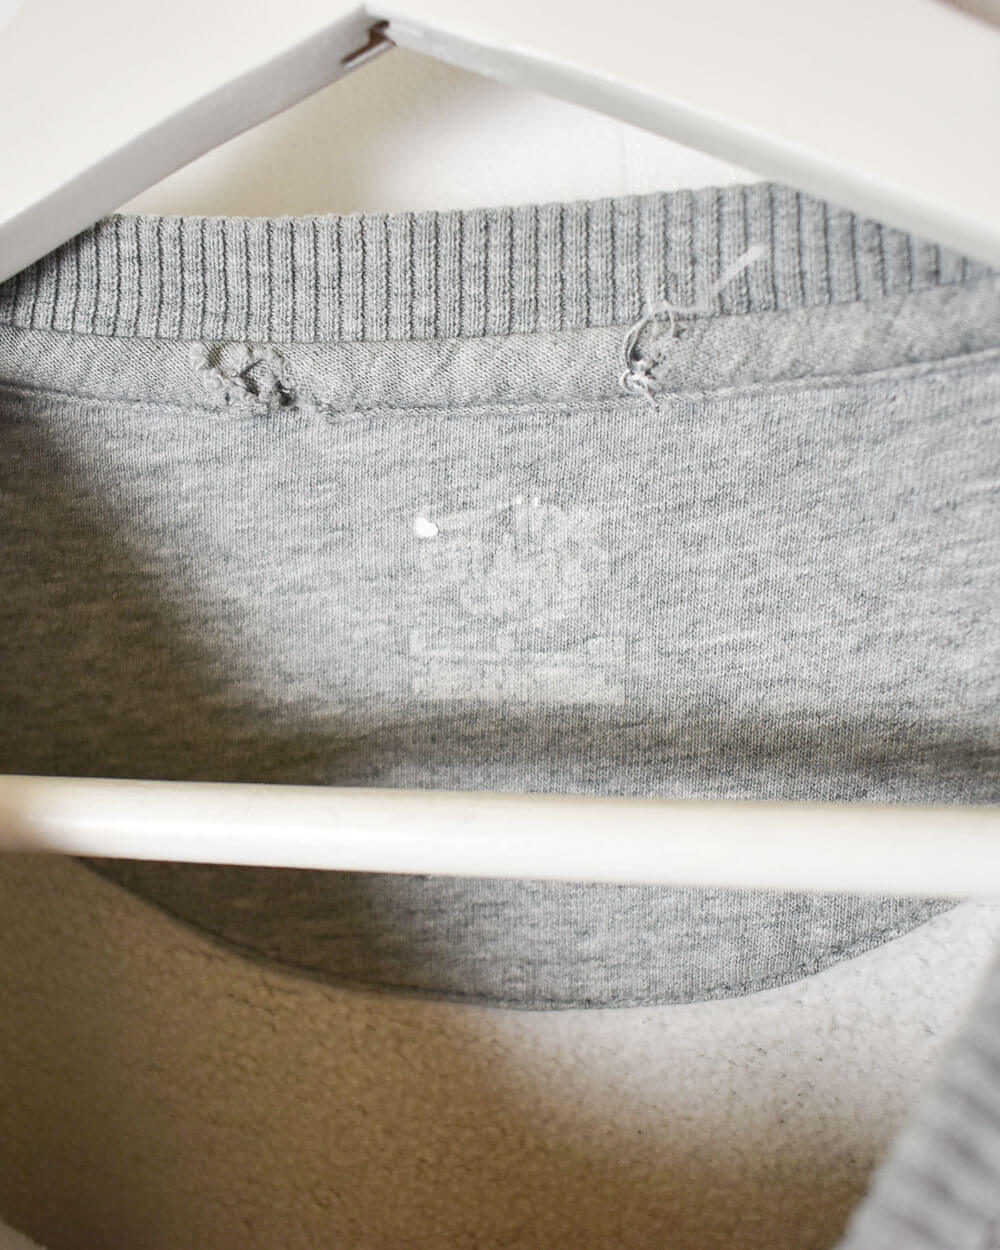 Stone Nike Sweatshirt - Small